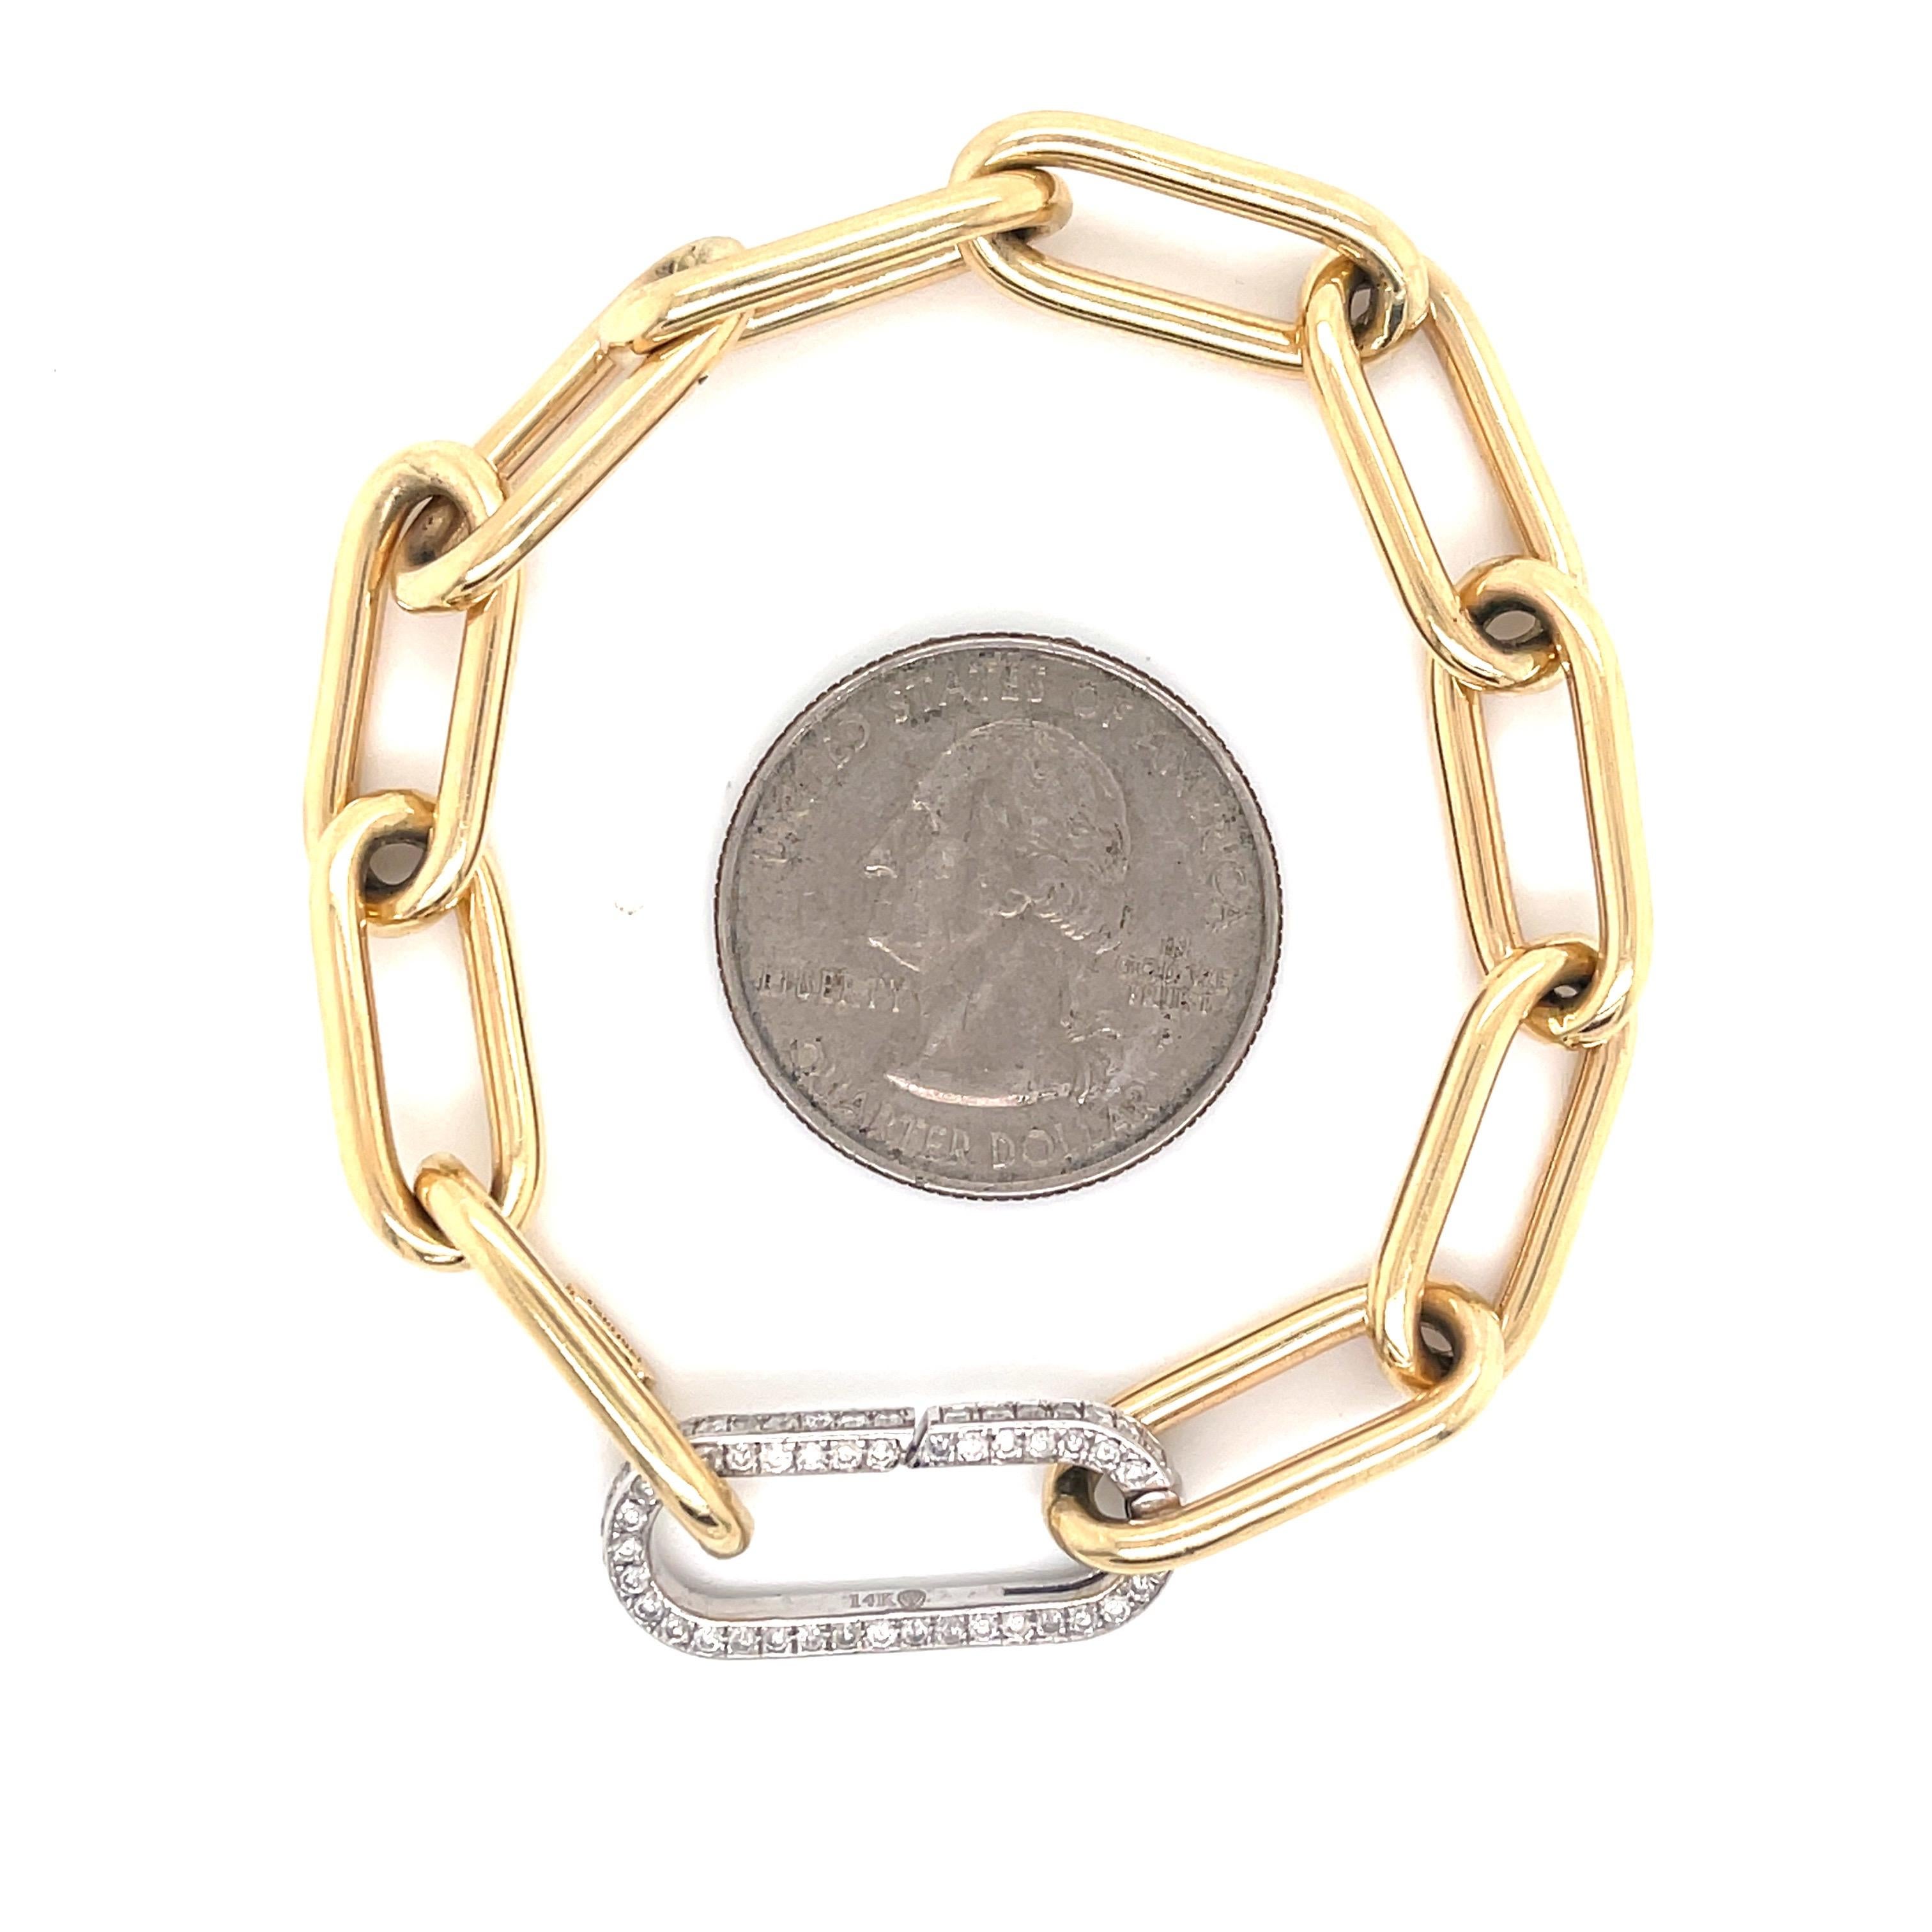 Italian 14 Karat Yellow Gold Chain Bracelet with a diamond white gold clasp approximately 1 carat.